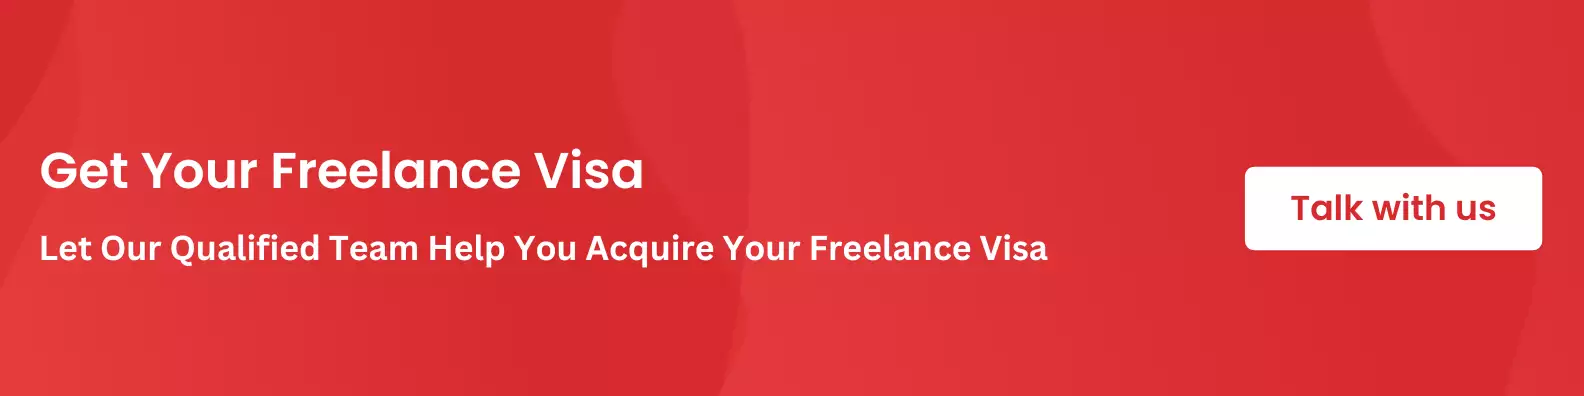 Freelance-visa